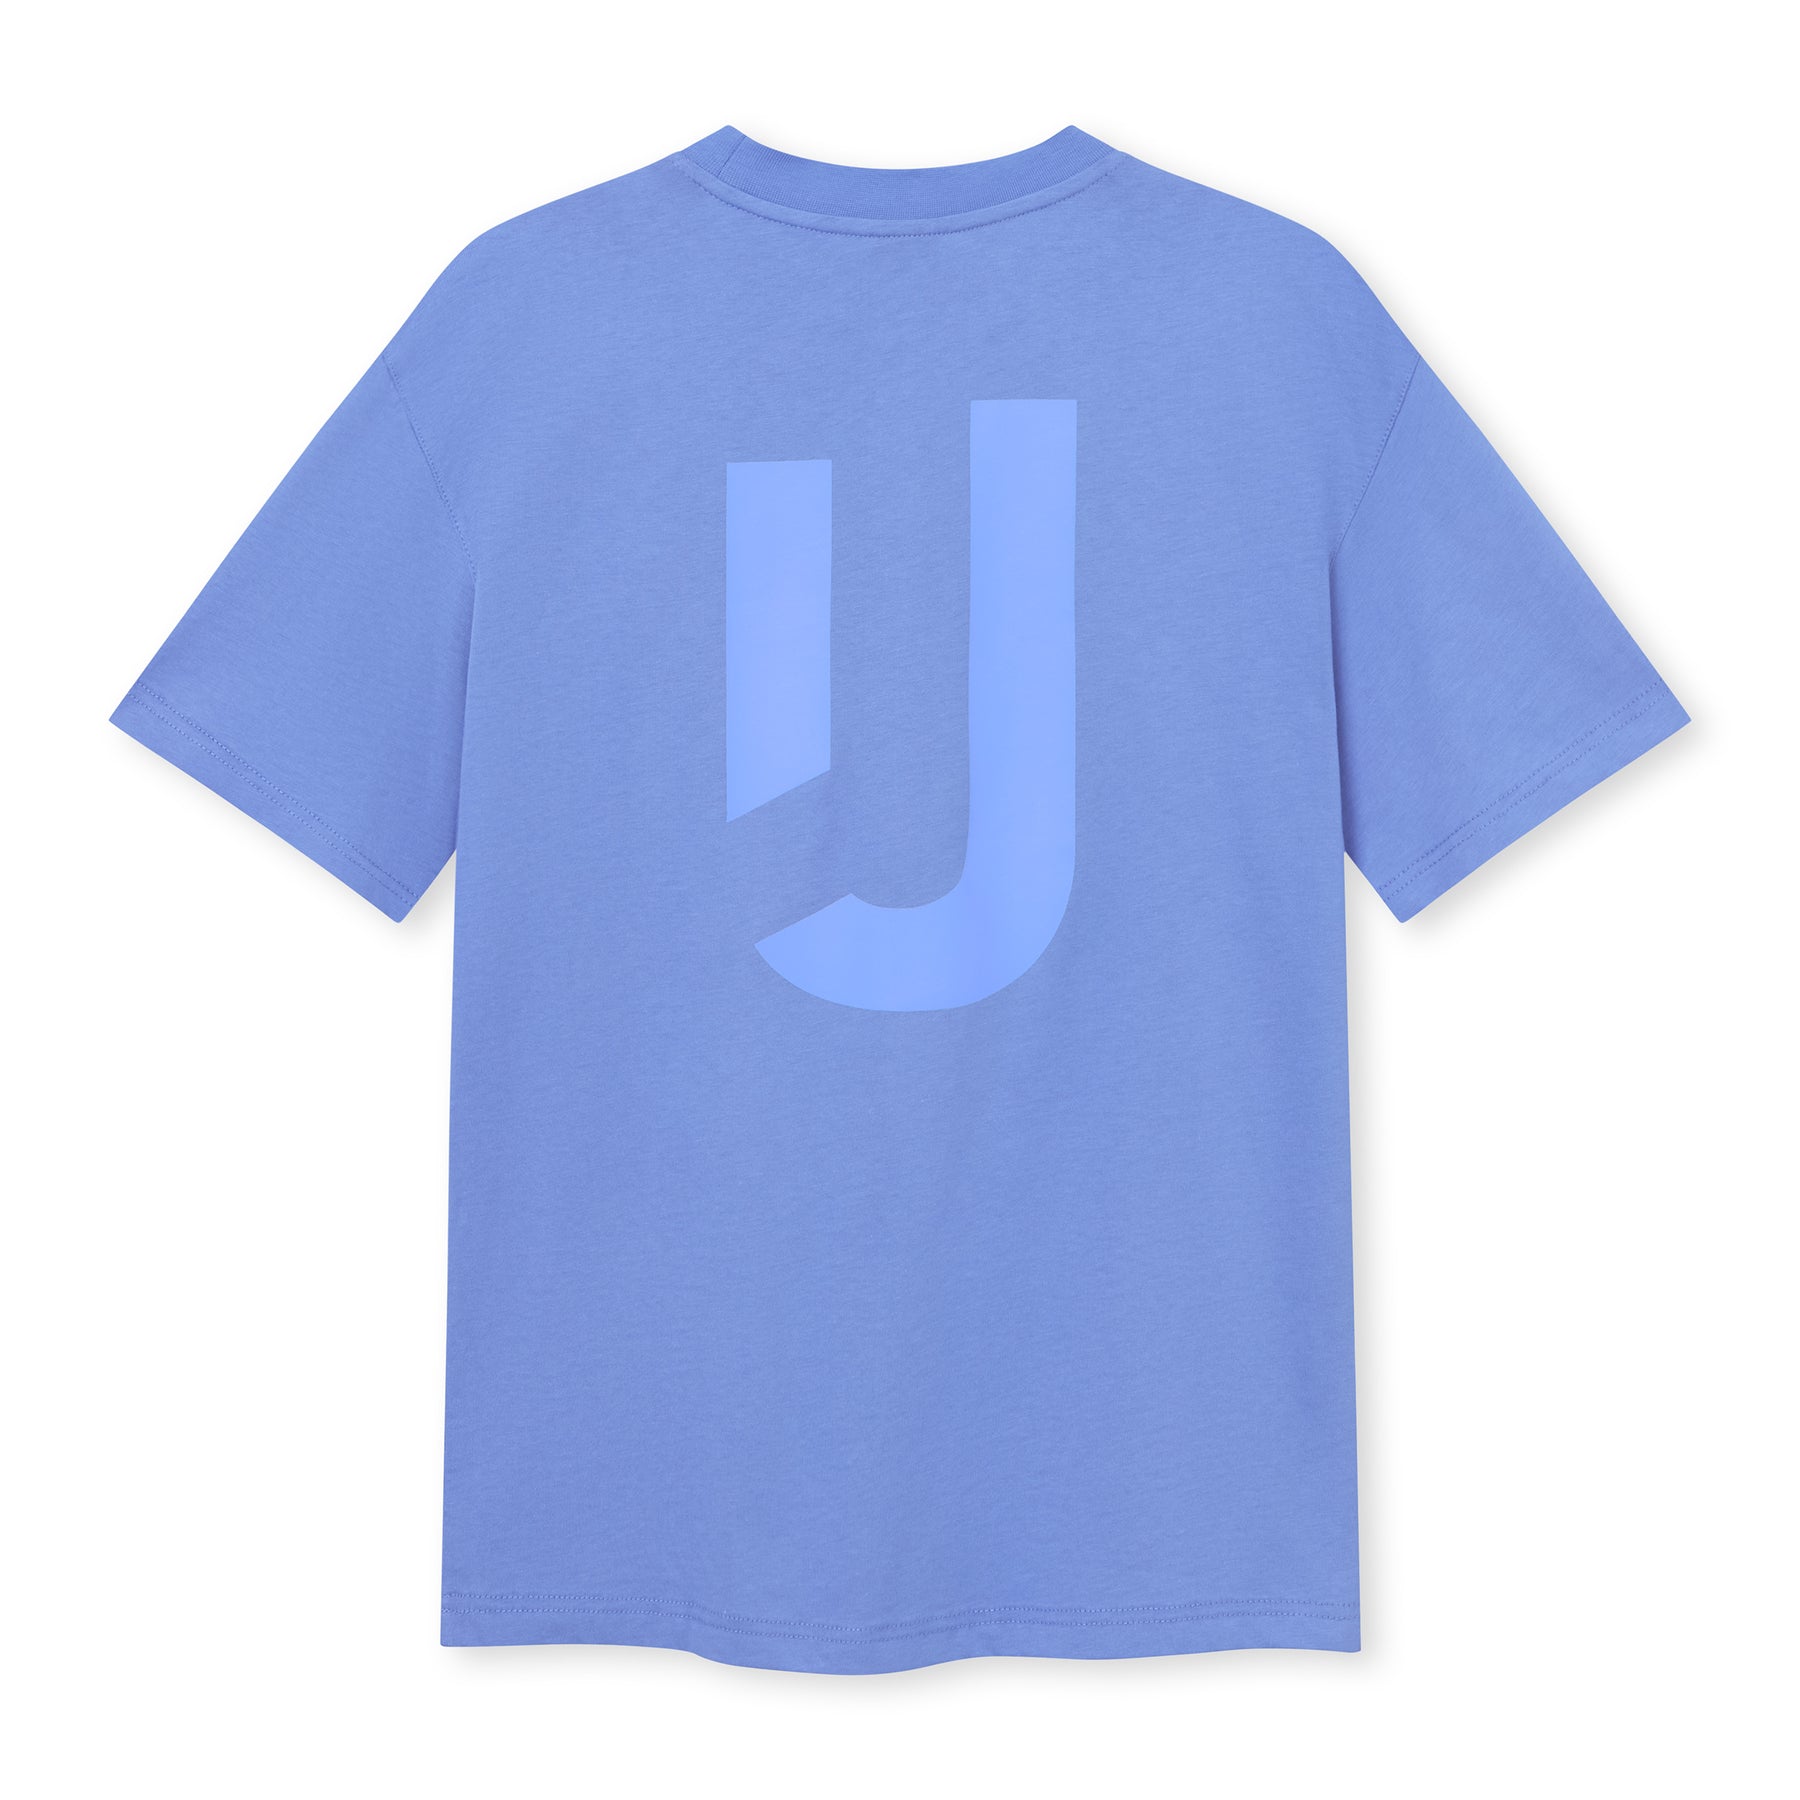 Oversized T-Shirt "Sammy JU"